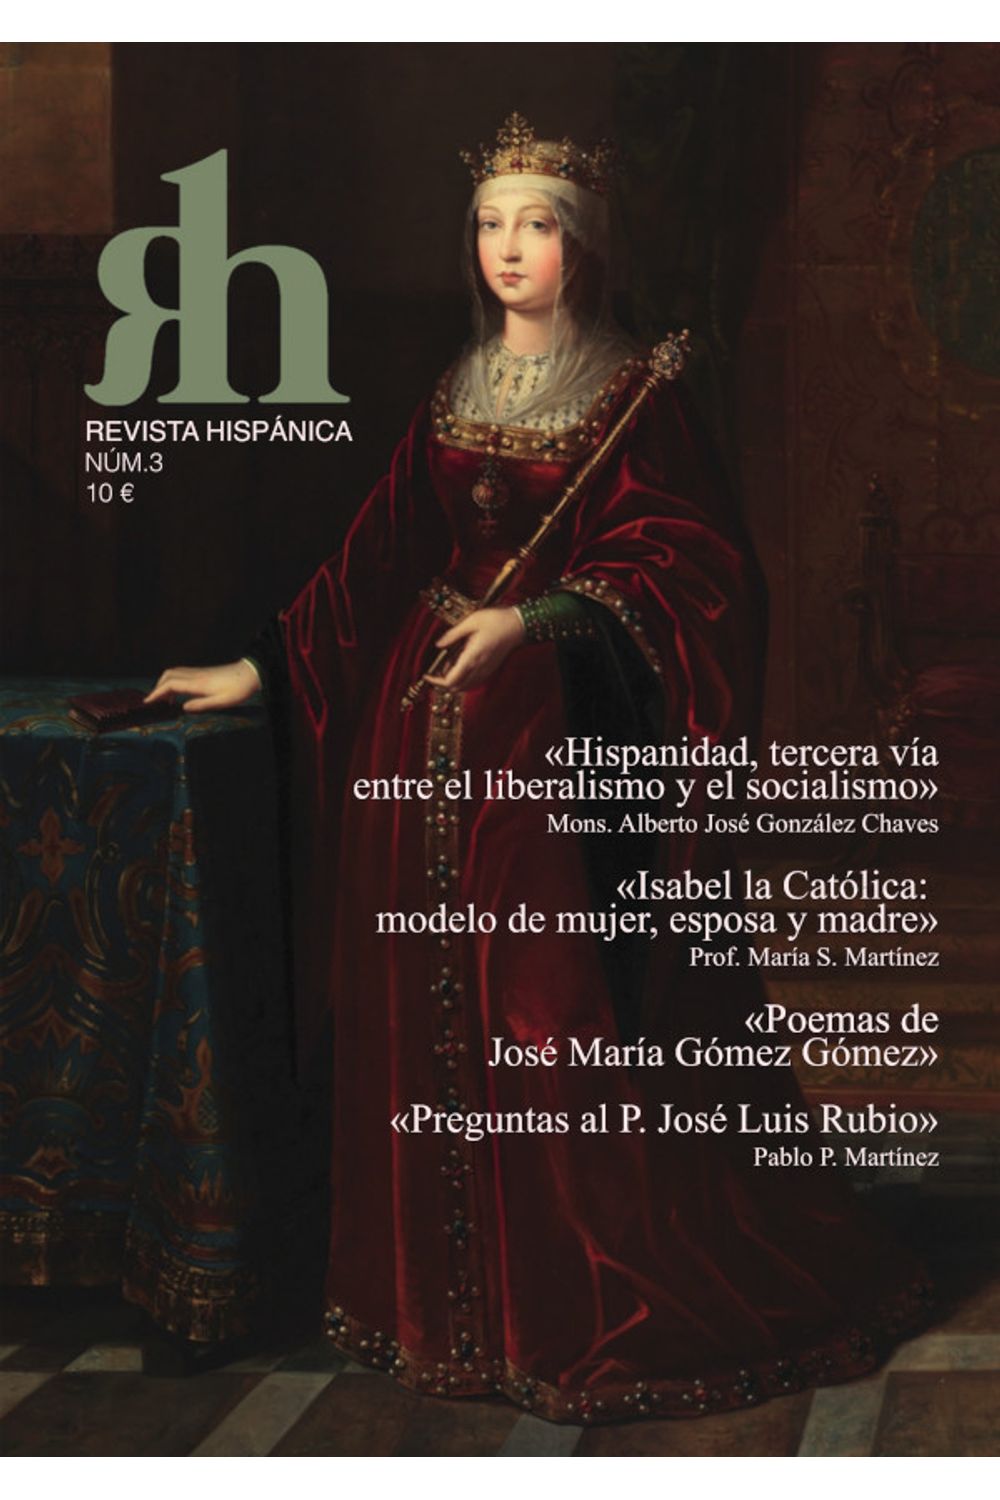 bm-revista-hispanica-n3-asociacion-noray-hispanica-pablo-antonio-pollicino-26956152